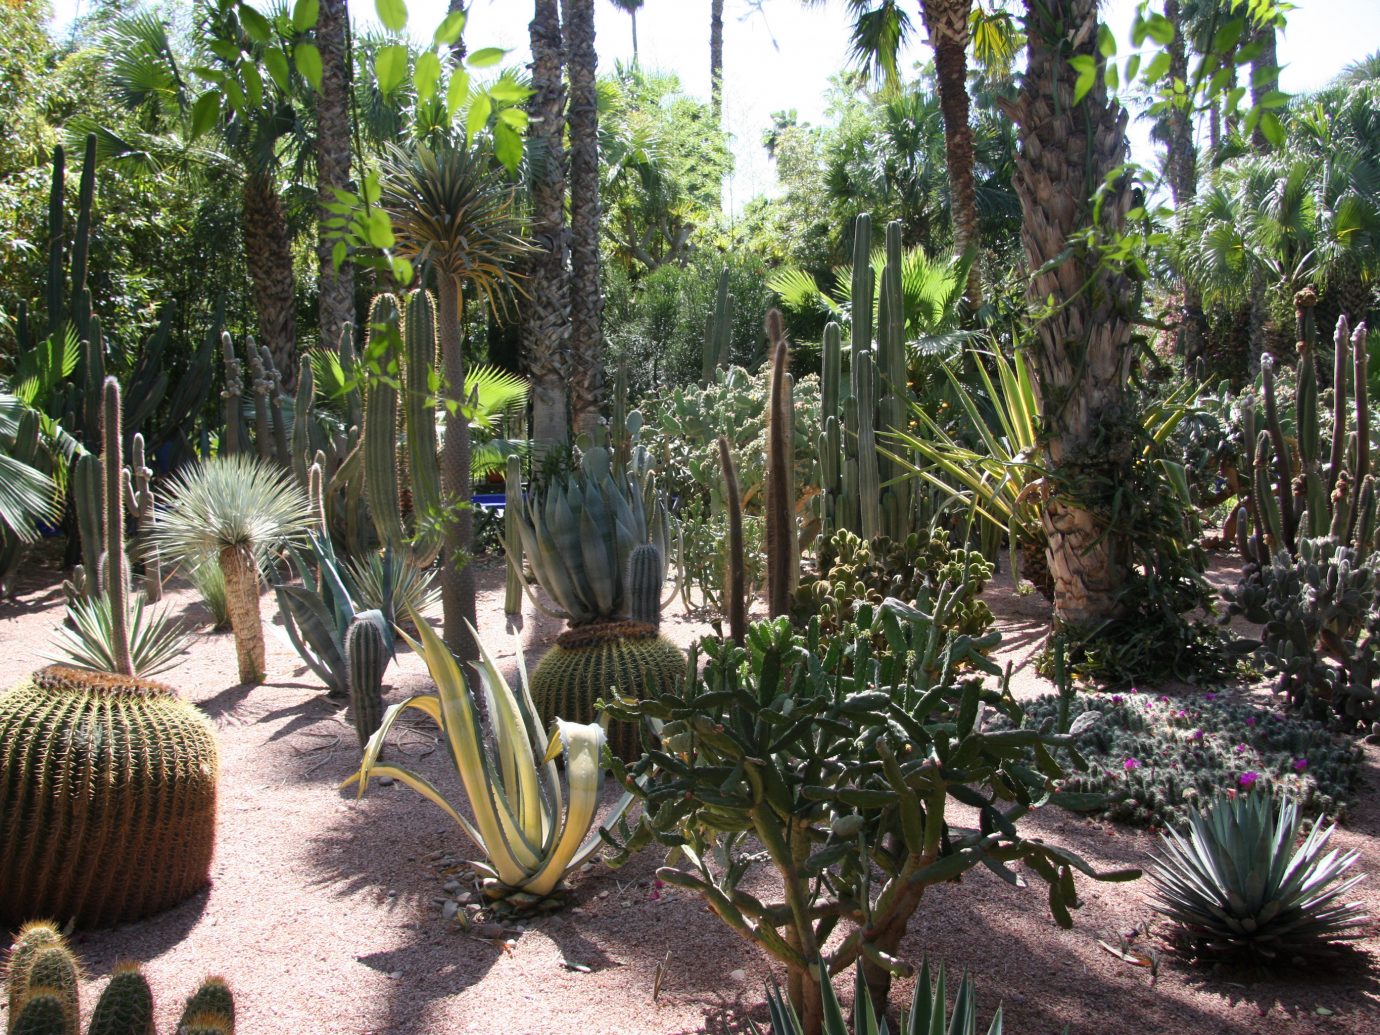 Trip Ideas tree cactus plant vegetation botanical garden outdoor arecales flowering plant flora palm tree biome Garden hedgehog cactus tropics flower recreation